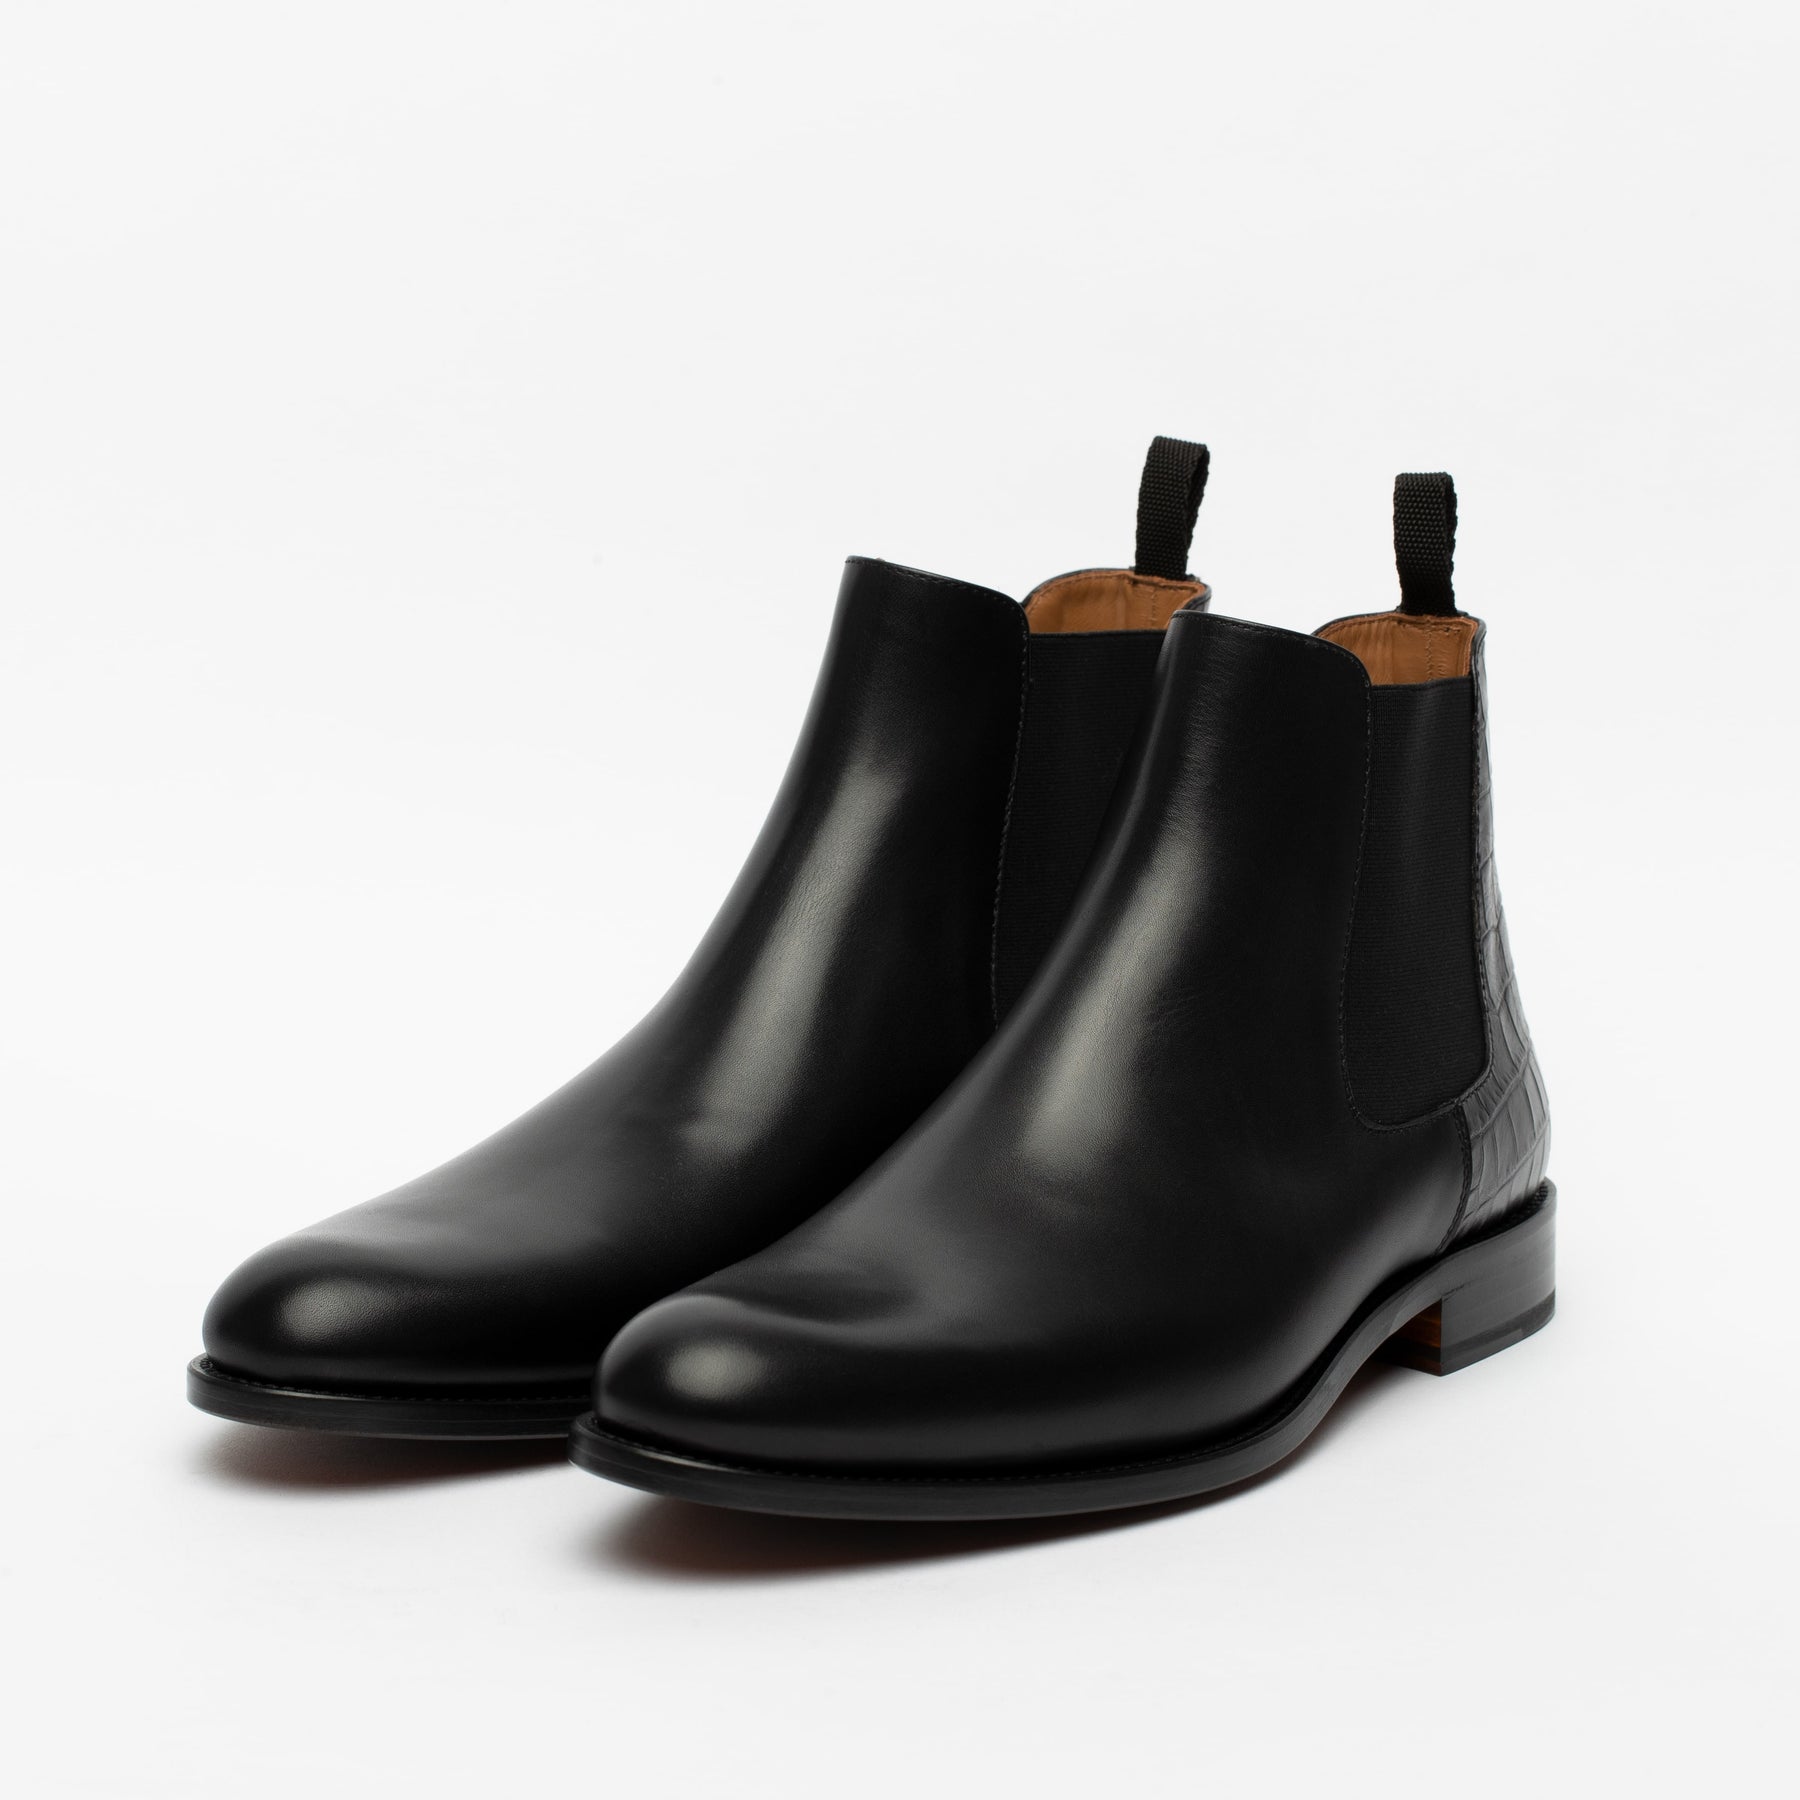 The Hiro Boot - Men's Black Leather Chelsea Boots | TAFT